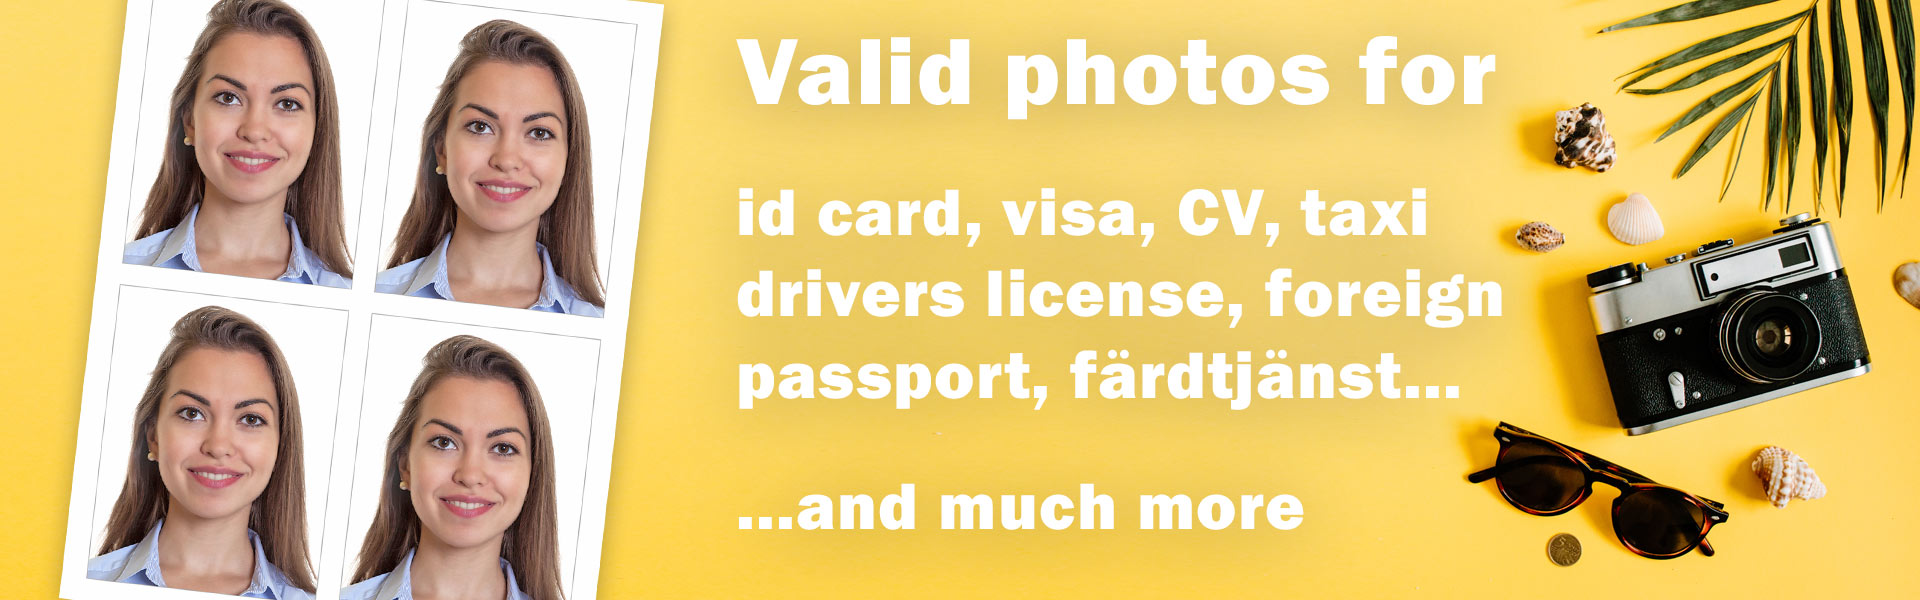 English version of page - passport photo photof or id card, visa etc